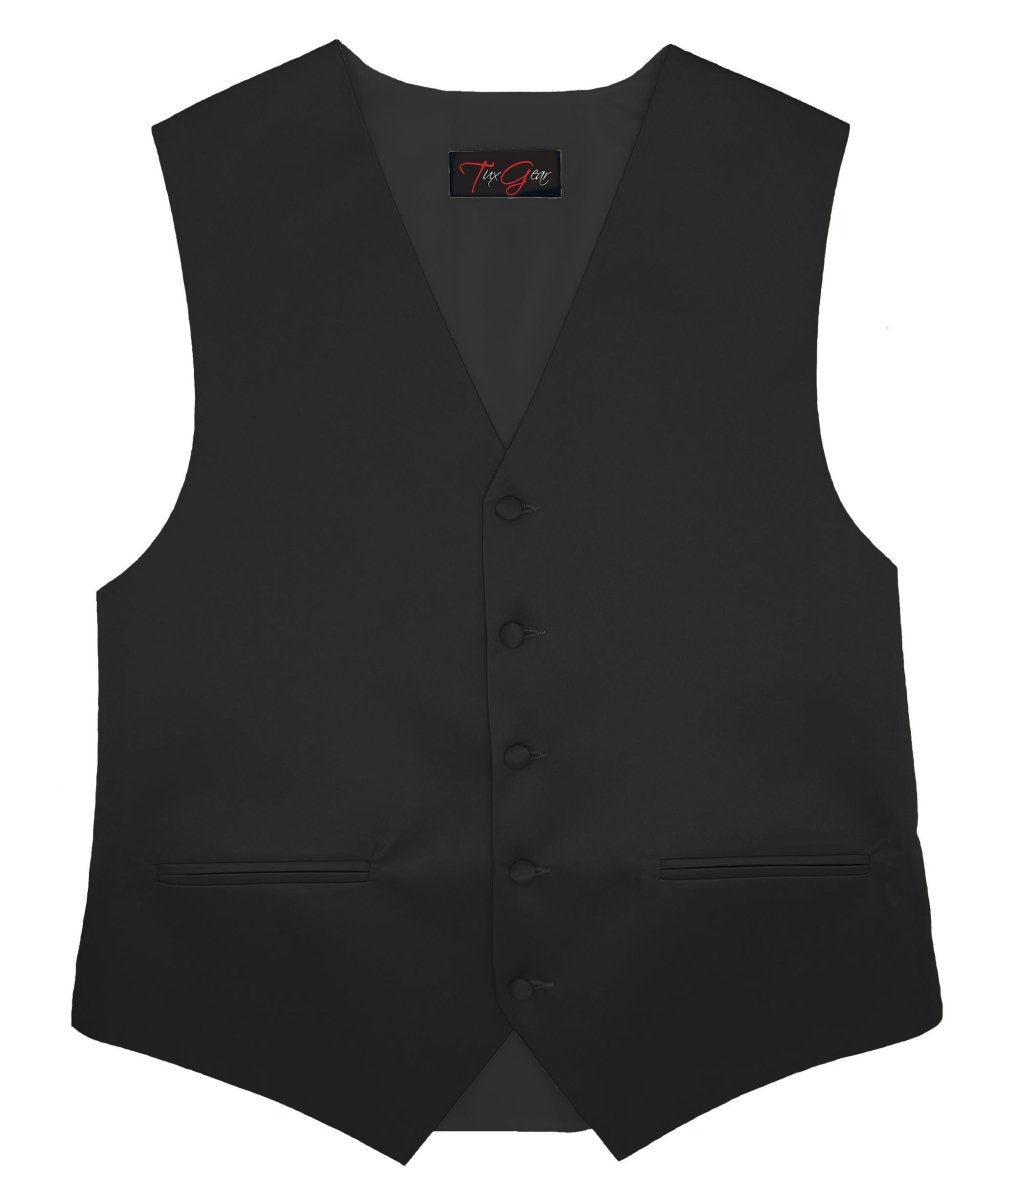 Mens Tuxedo Vest and Tie Sets Fullback Design in Popular Formal Wedding Colors - Tuxgear